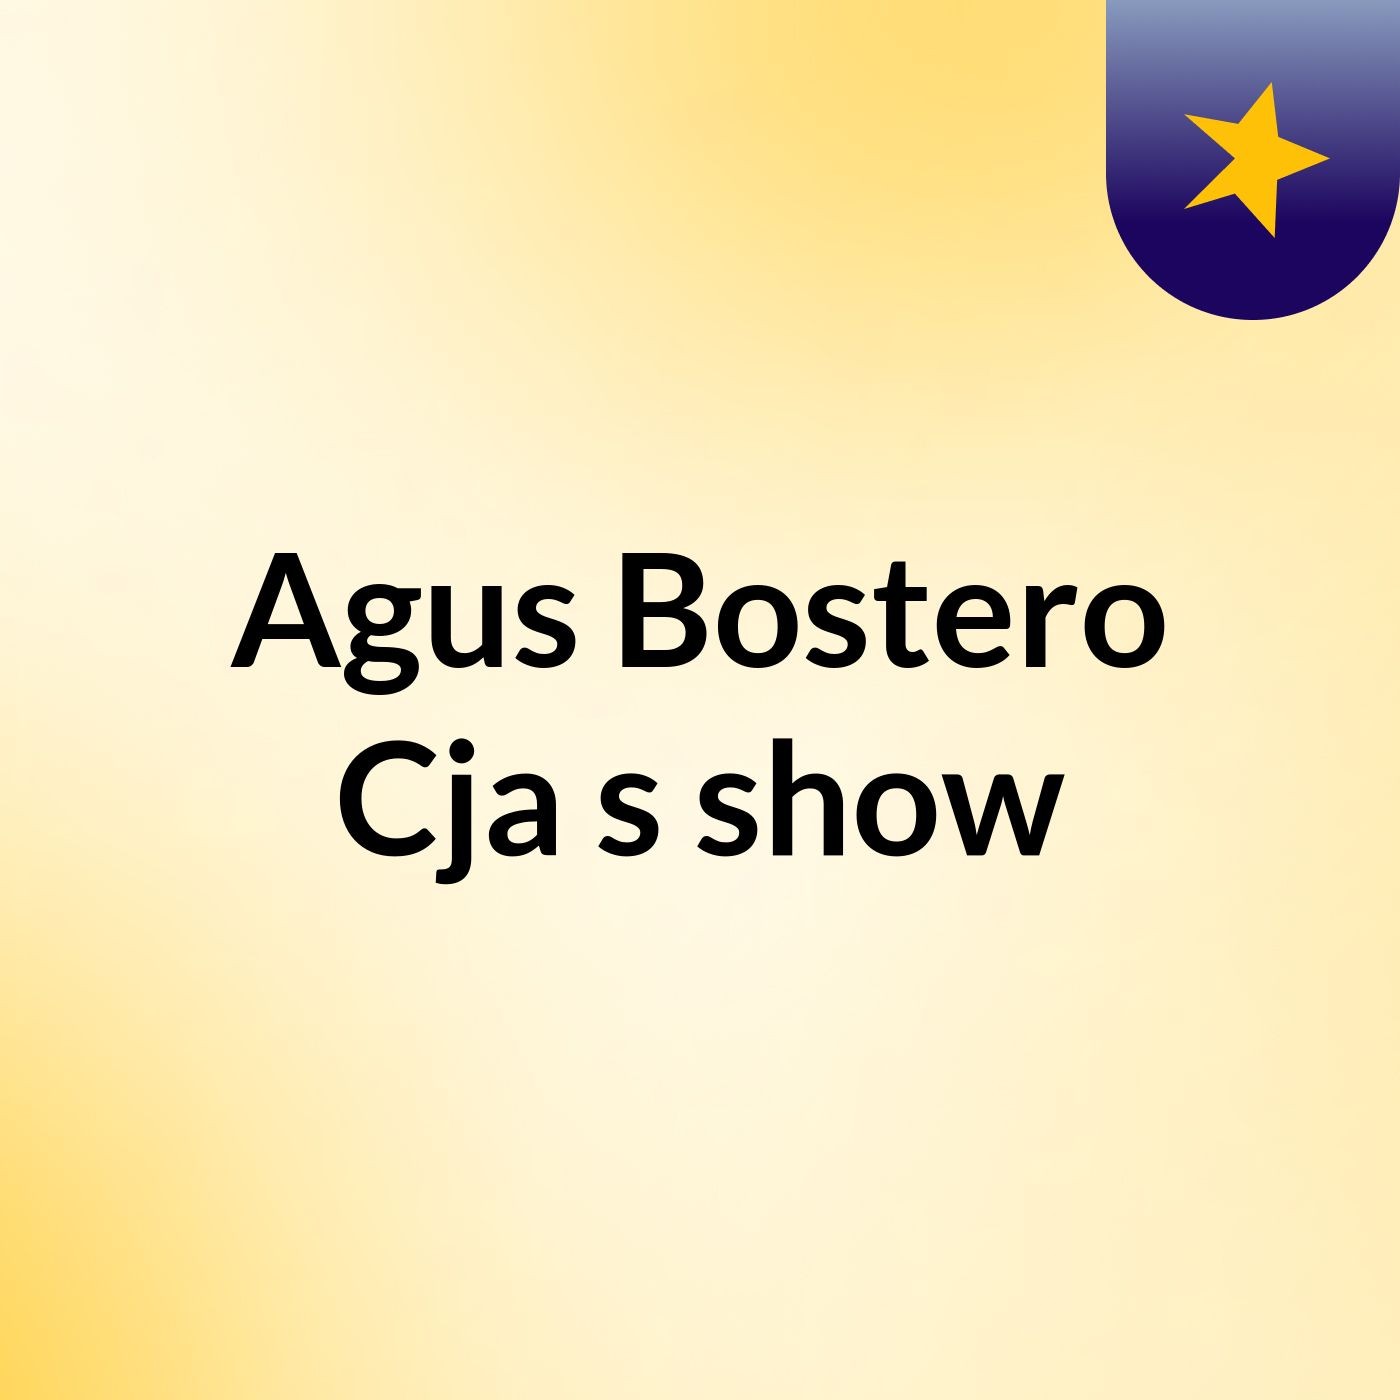 Agus Bostero Cja's show